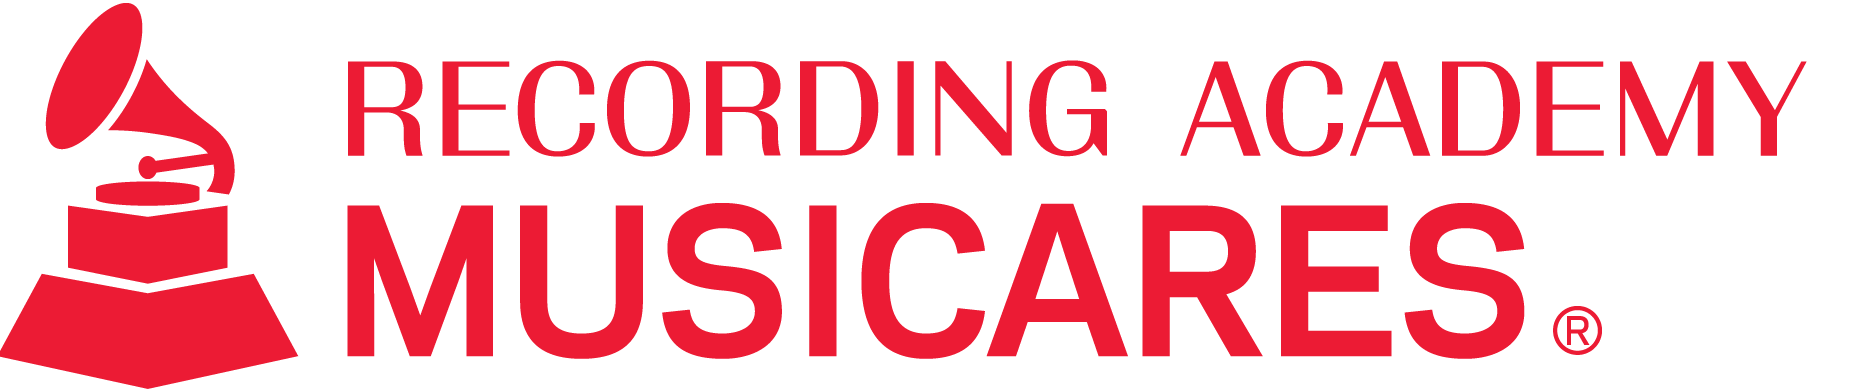 Recording Academy / Musicares